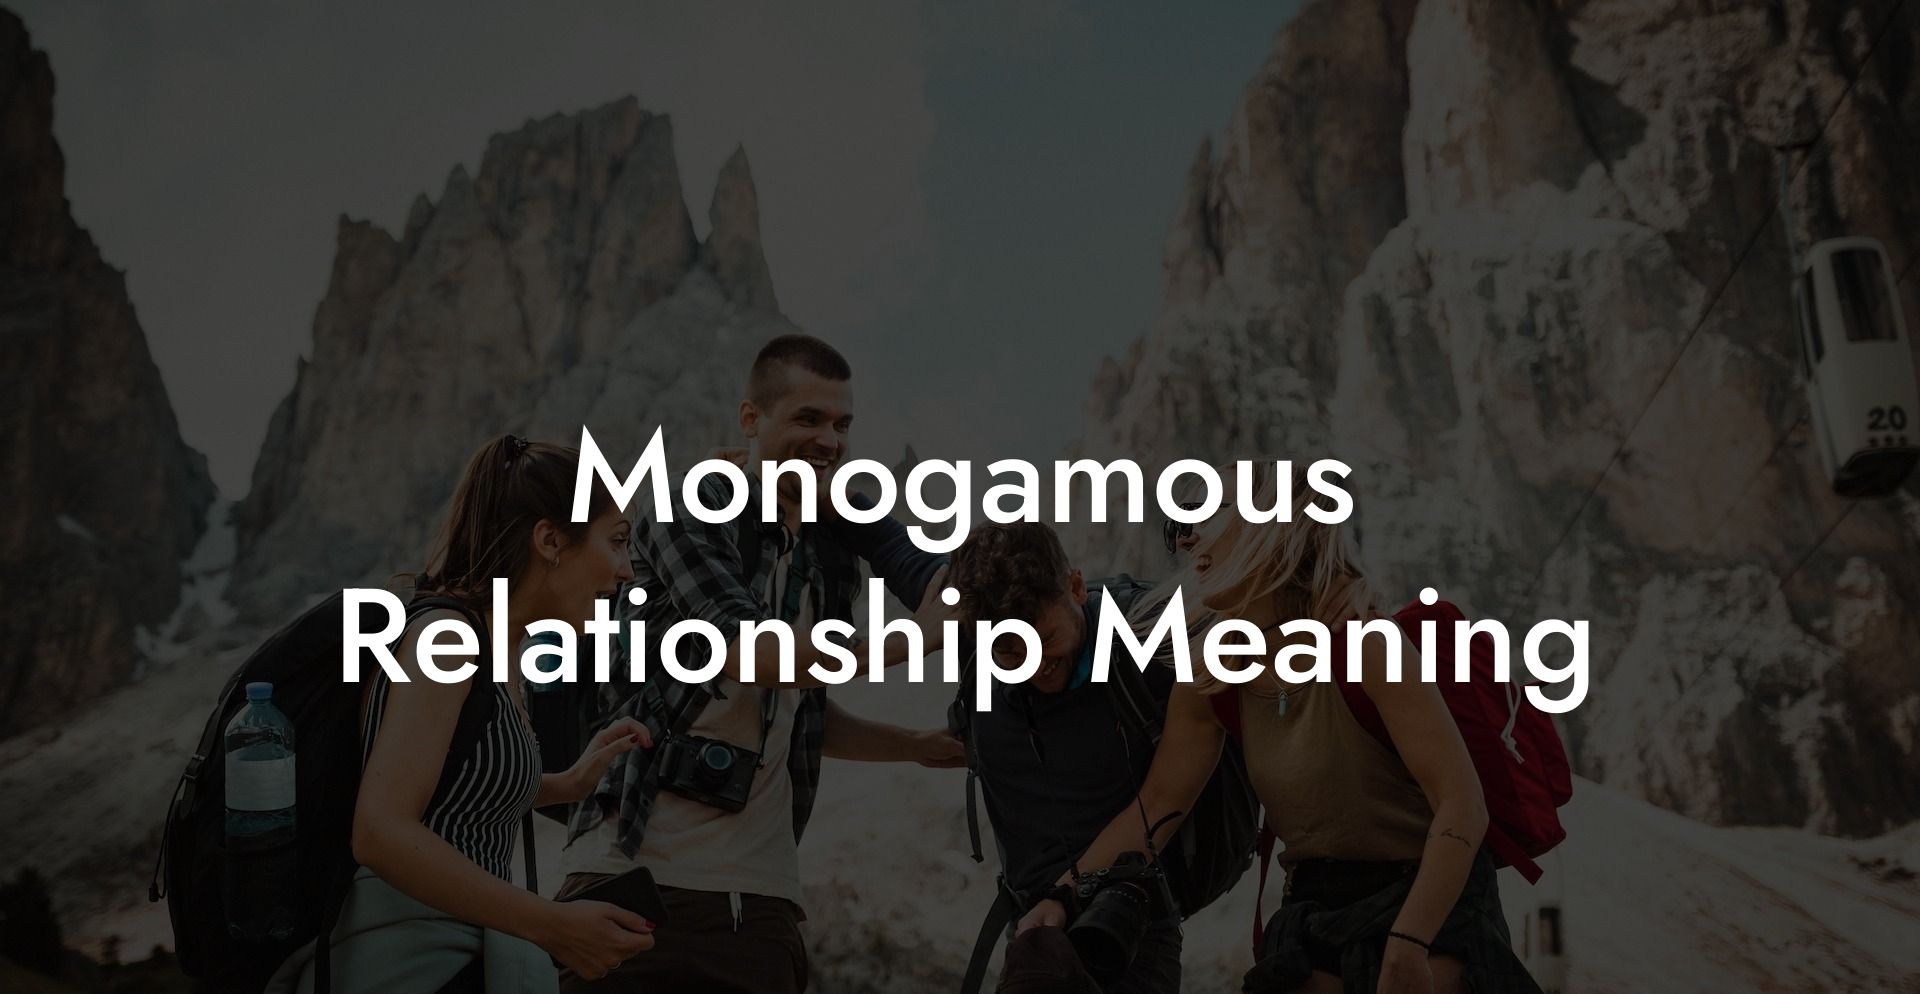 Monogamous Relationship Meaning